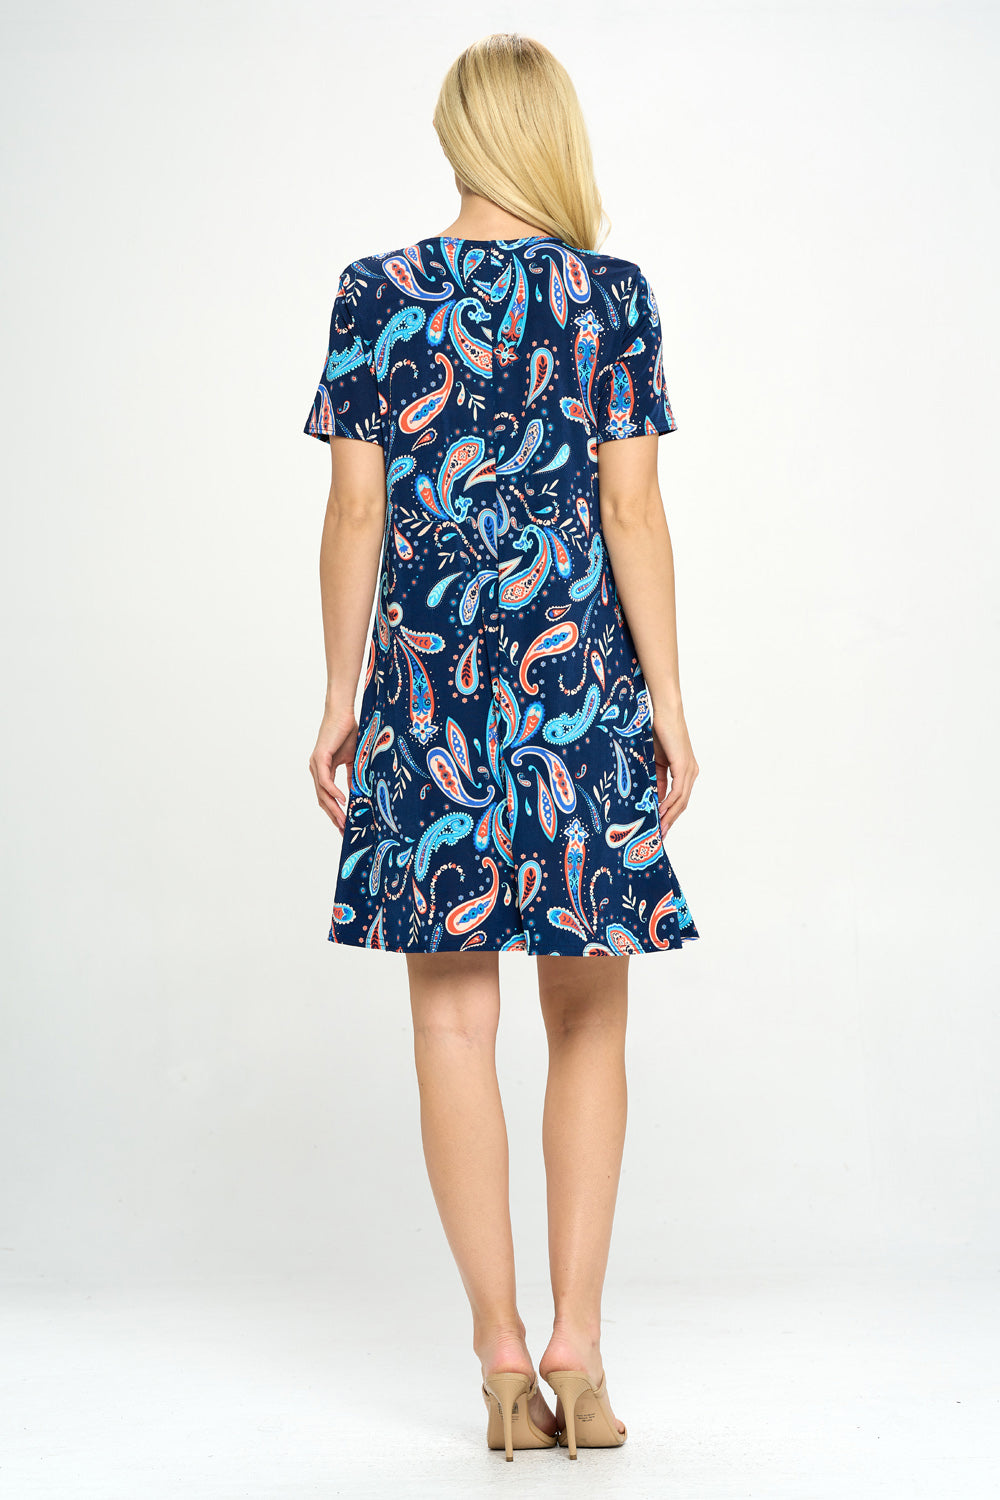 Missy Dress Short Sleeve Print-7004BN-SRP1-W323